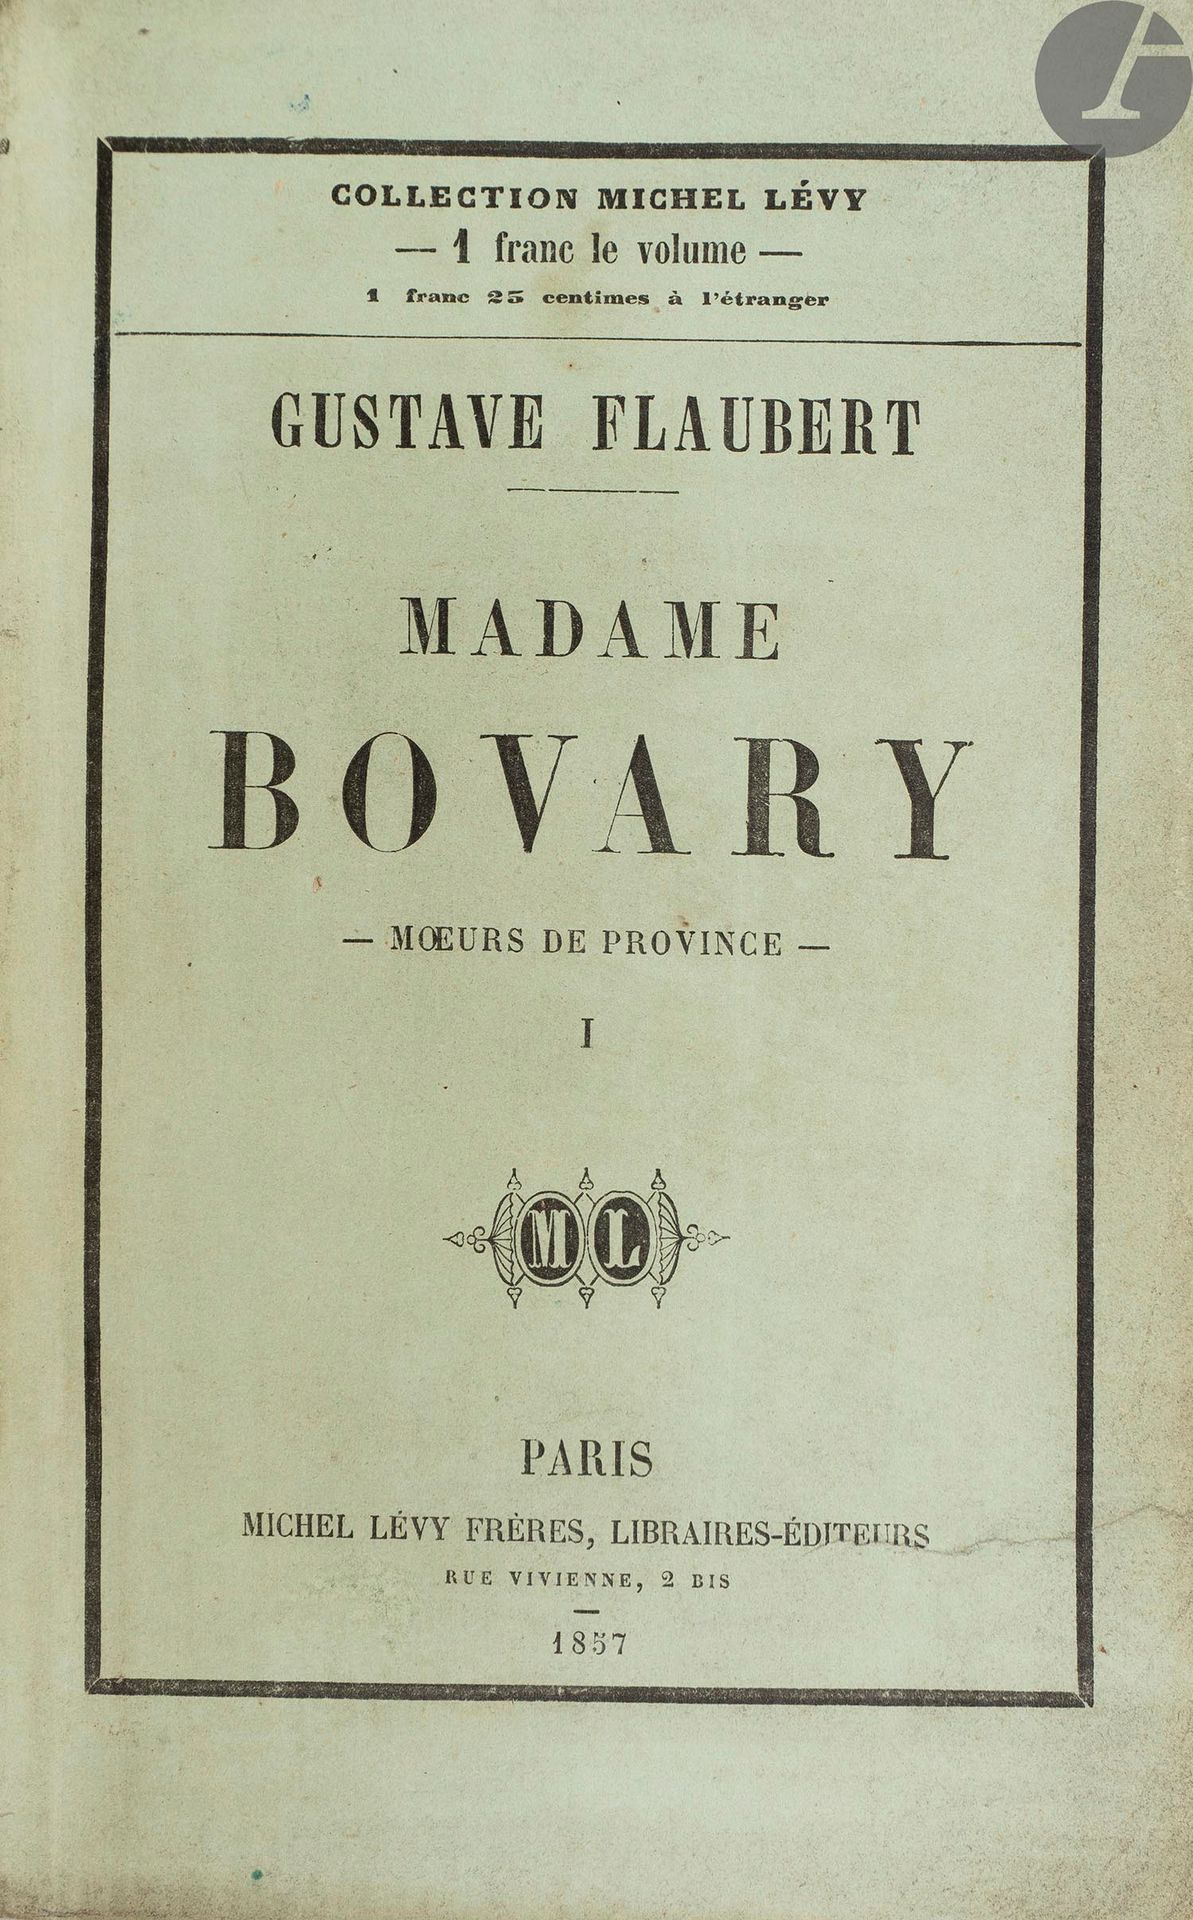 Null FLAUBERT（古斯塔夫）。
包法利夫人》。全省的母亲。
巴黎：Michel Lévy frères, 1857年。- 2卷18册，182 x 11&hellip;